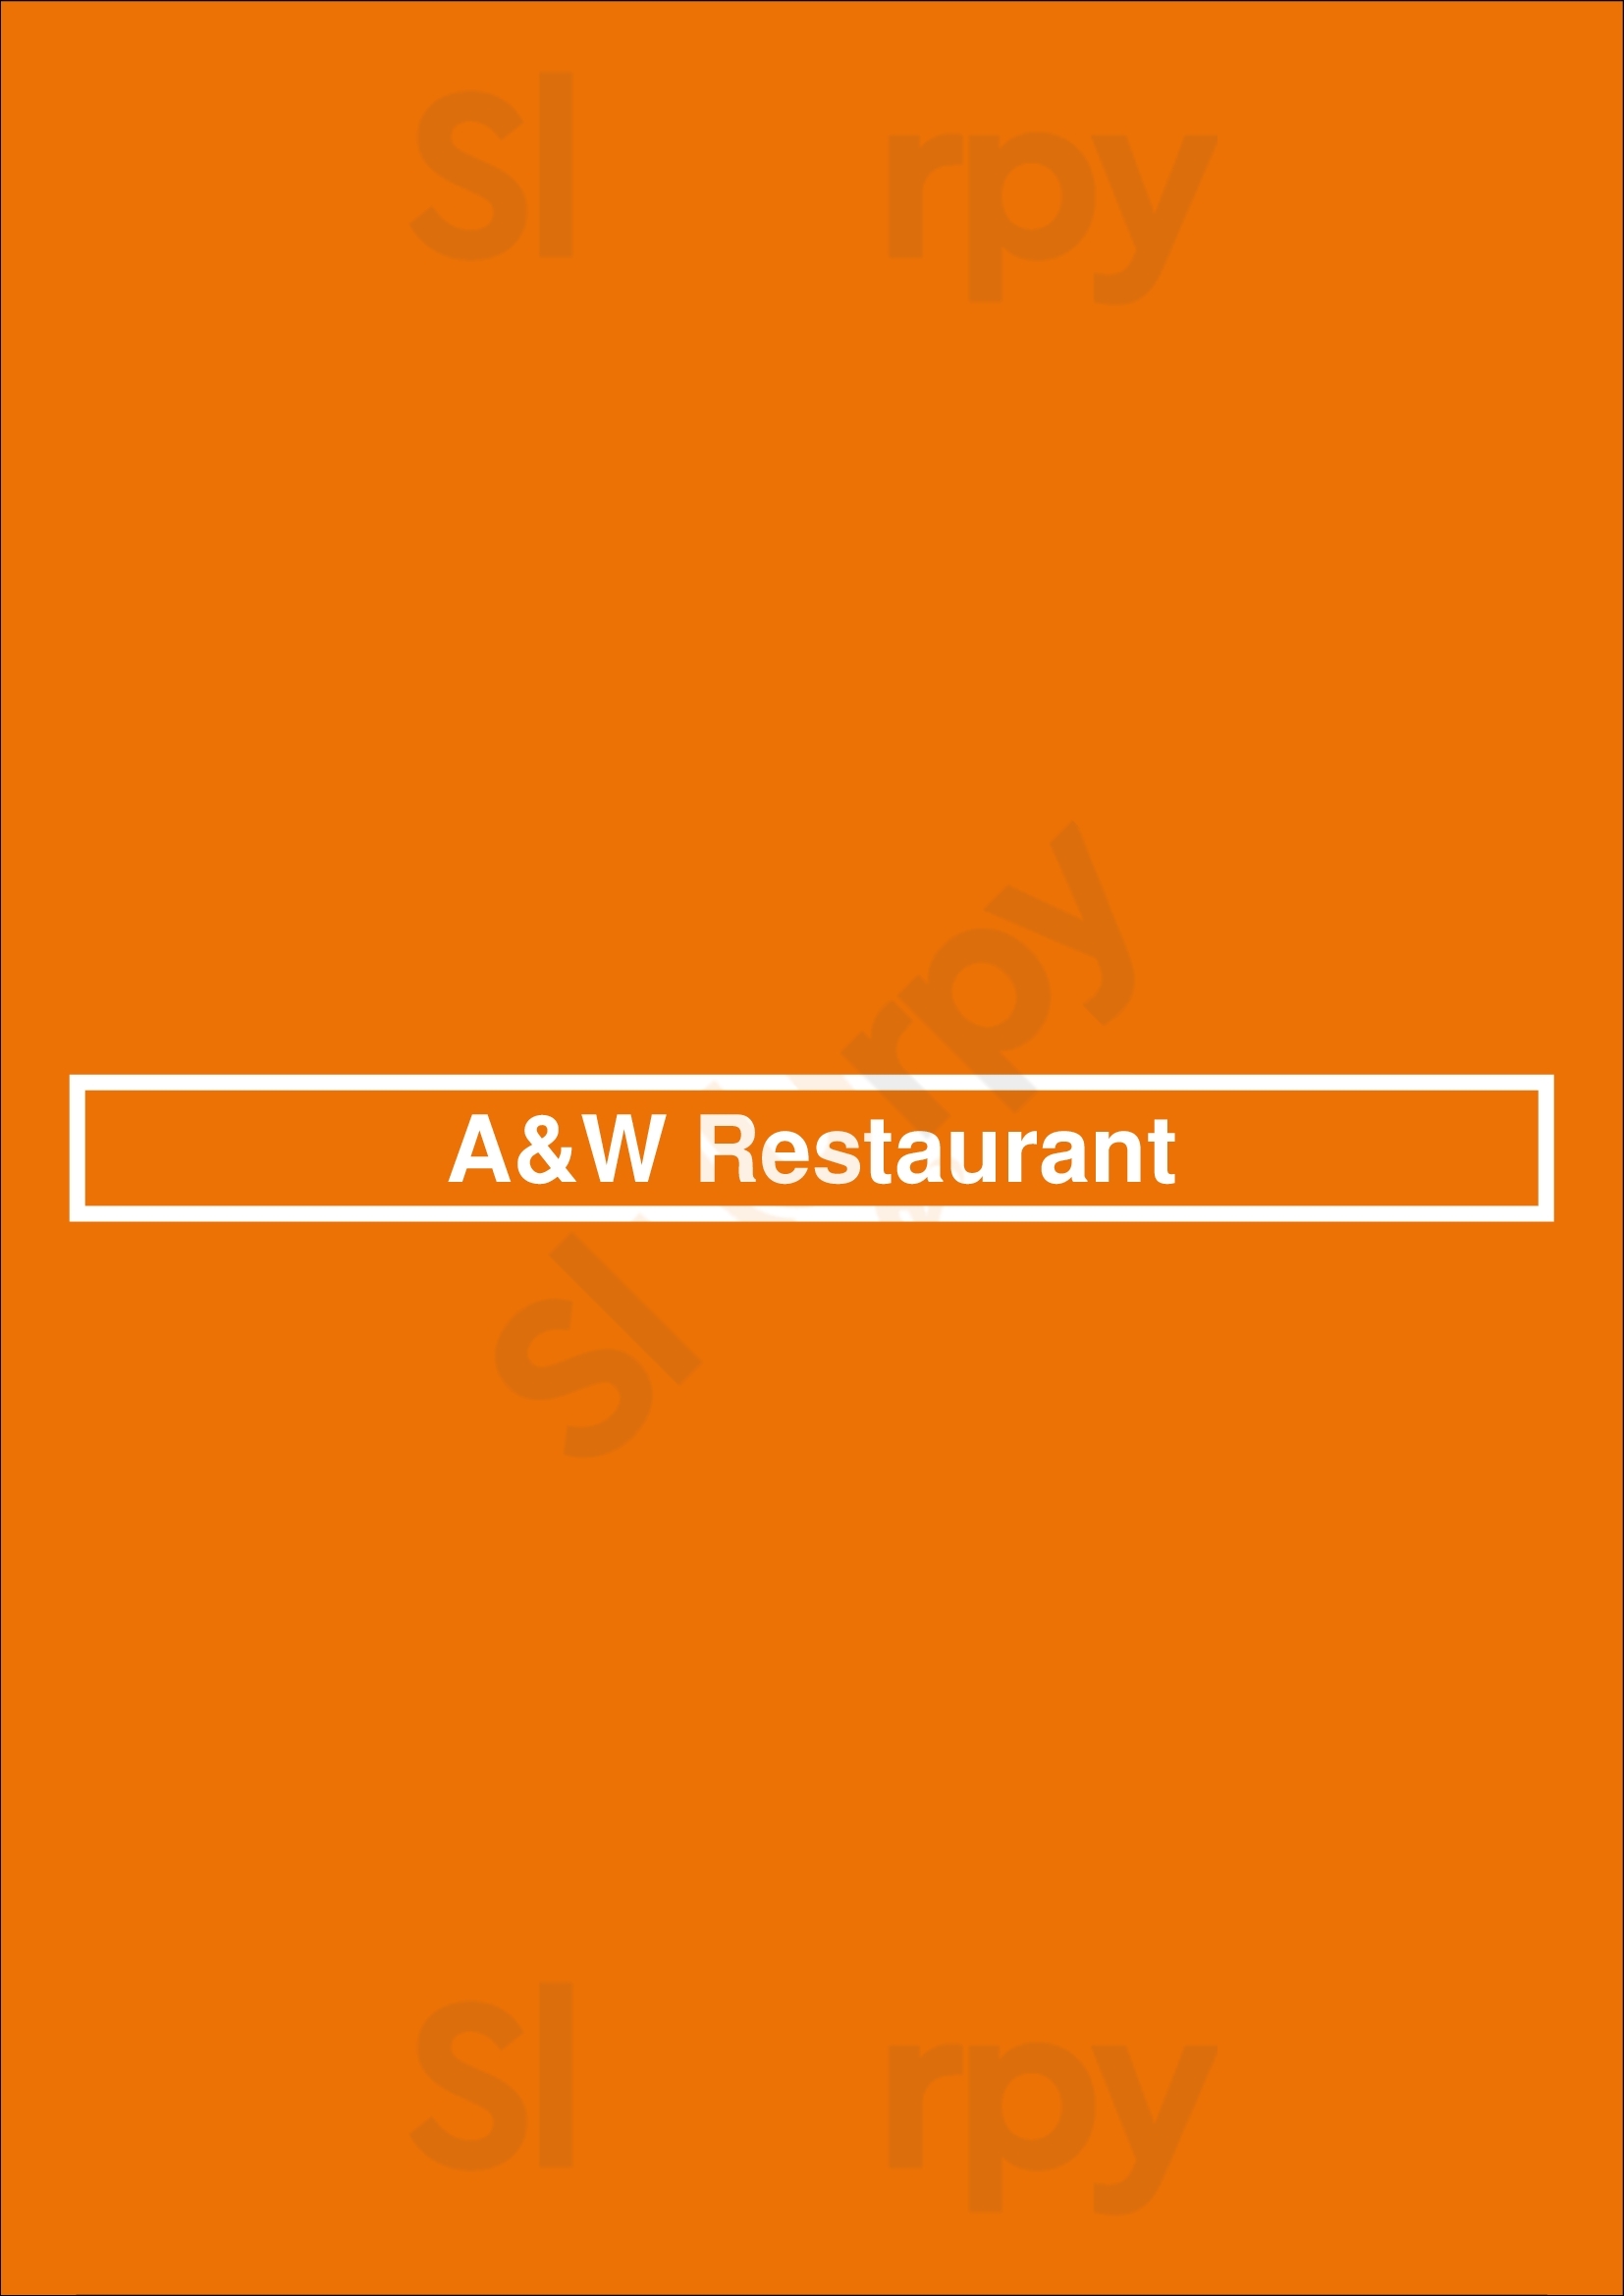 A&w Restaurant Edmonton Menu - 1